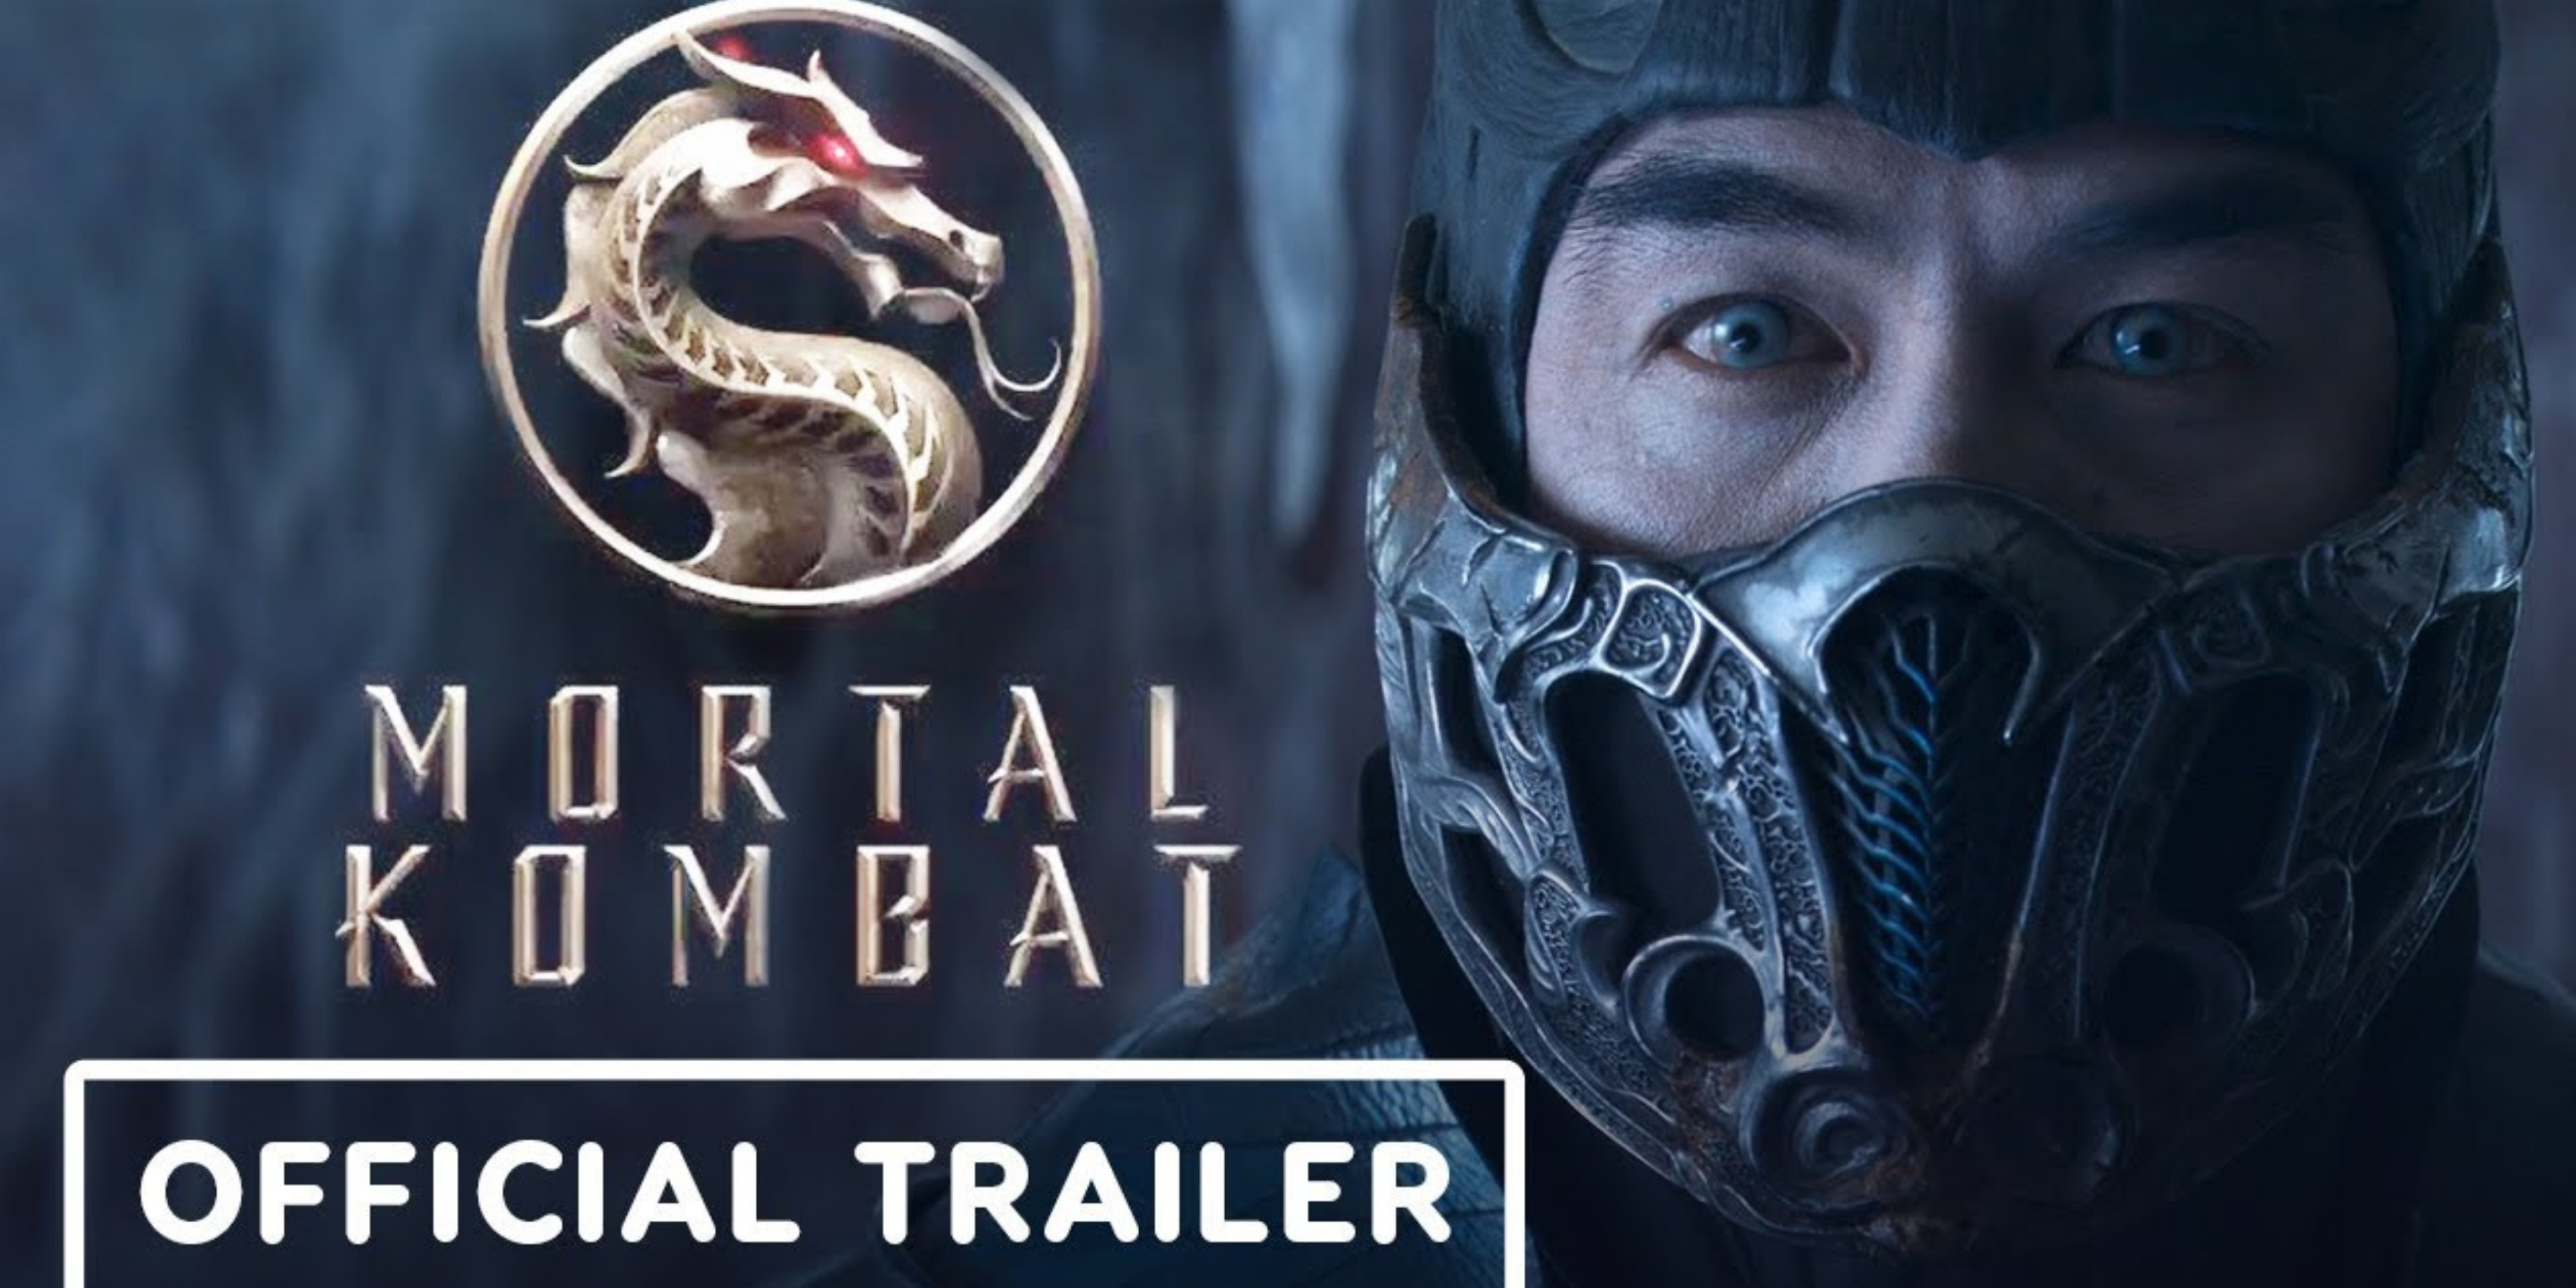 Mortal Kombat Trailer is getting so much